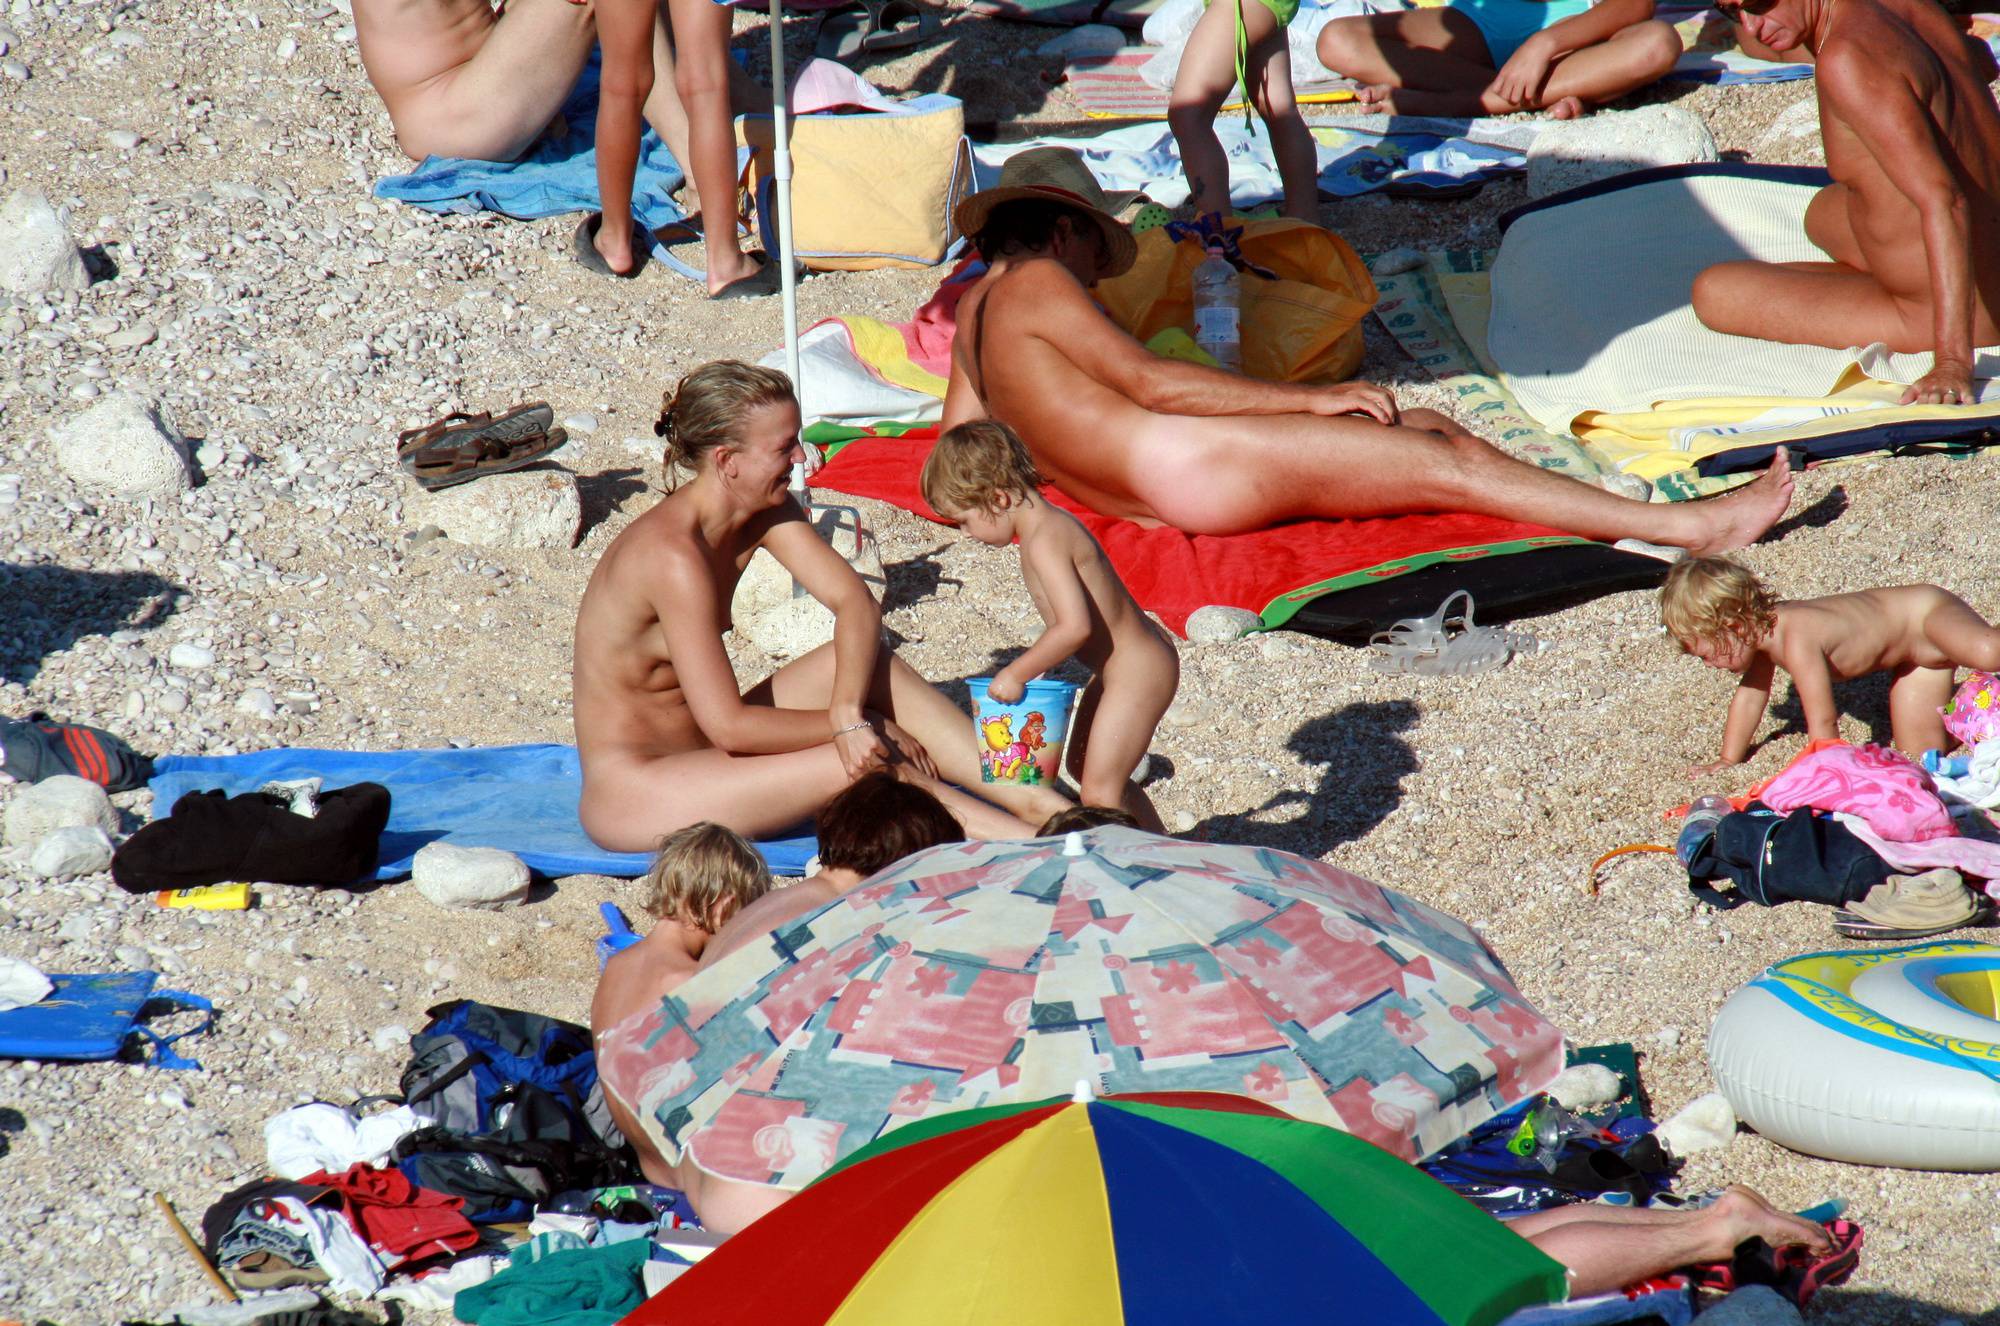 Pure Nudism Pics-Nudist Beach Assortment - 2